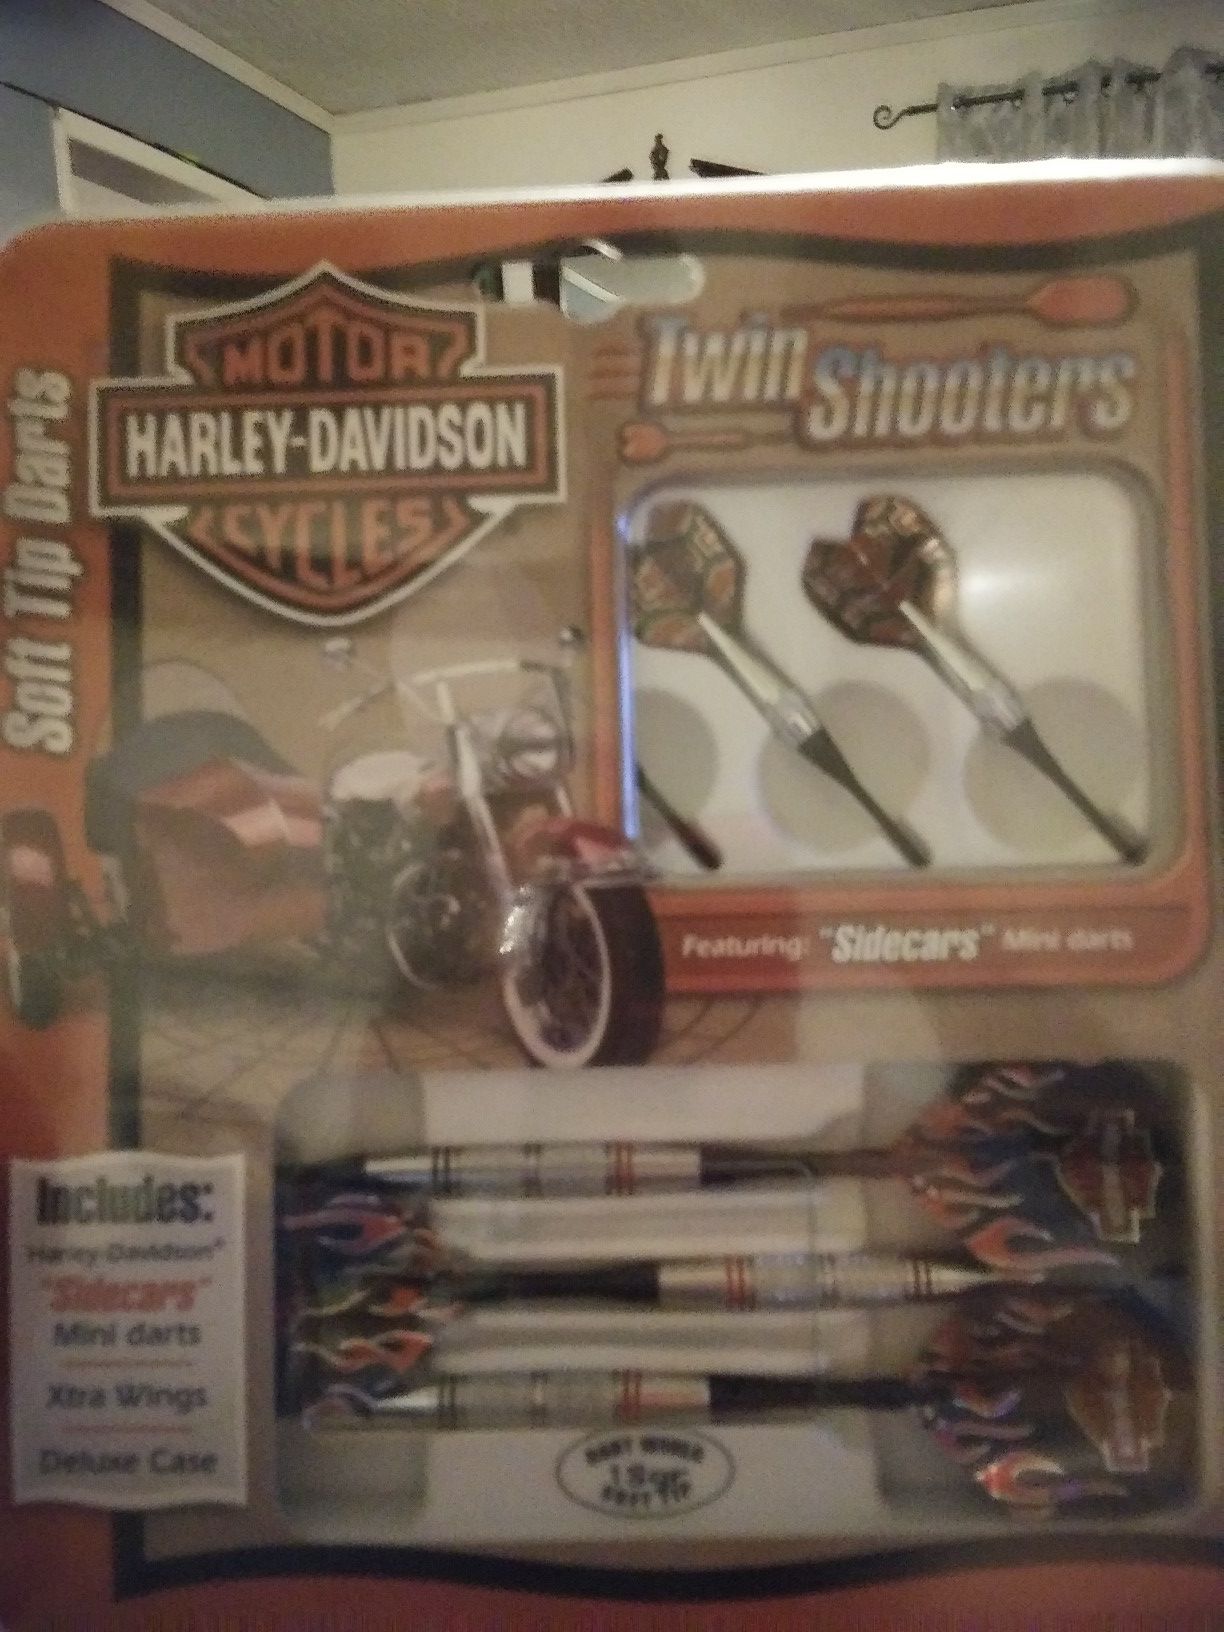 Harley Davidson 18 grm darts with twin shooters